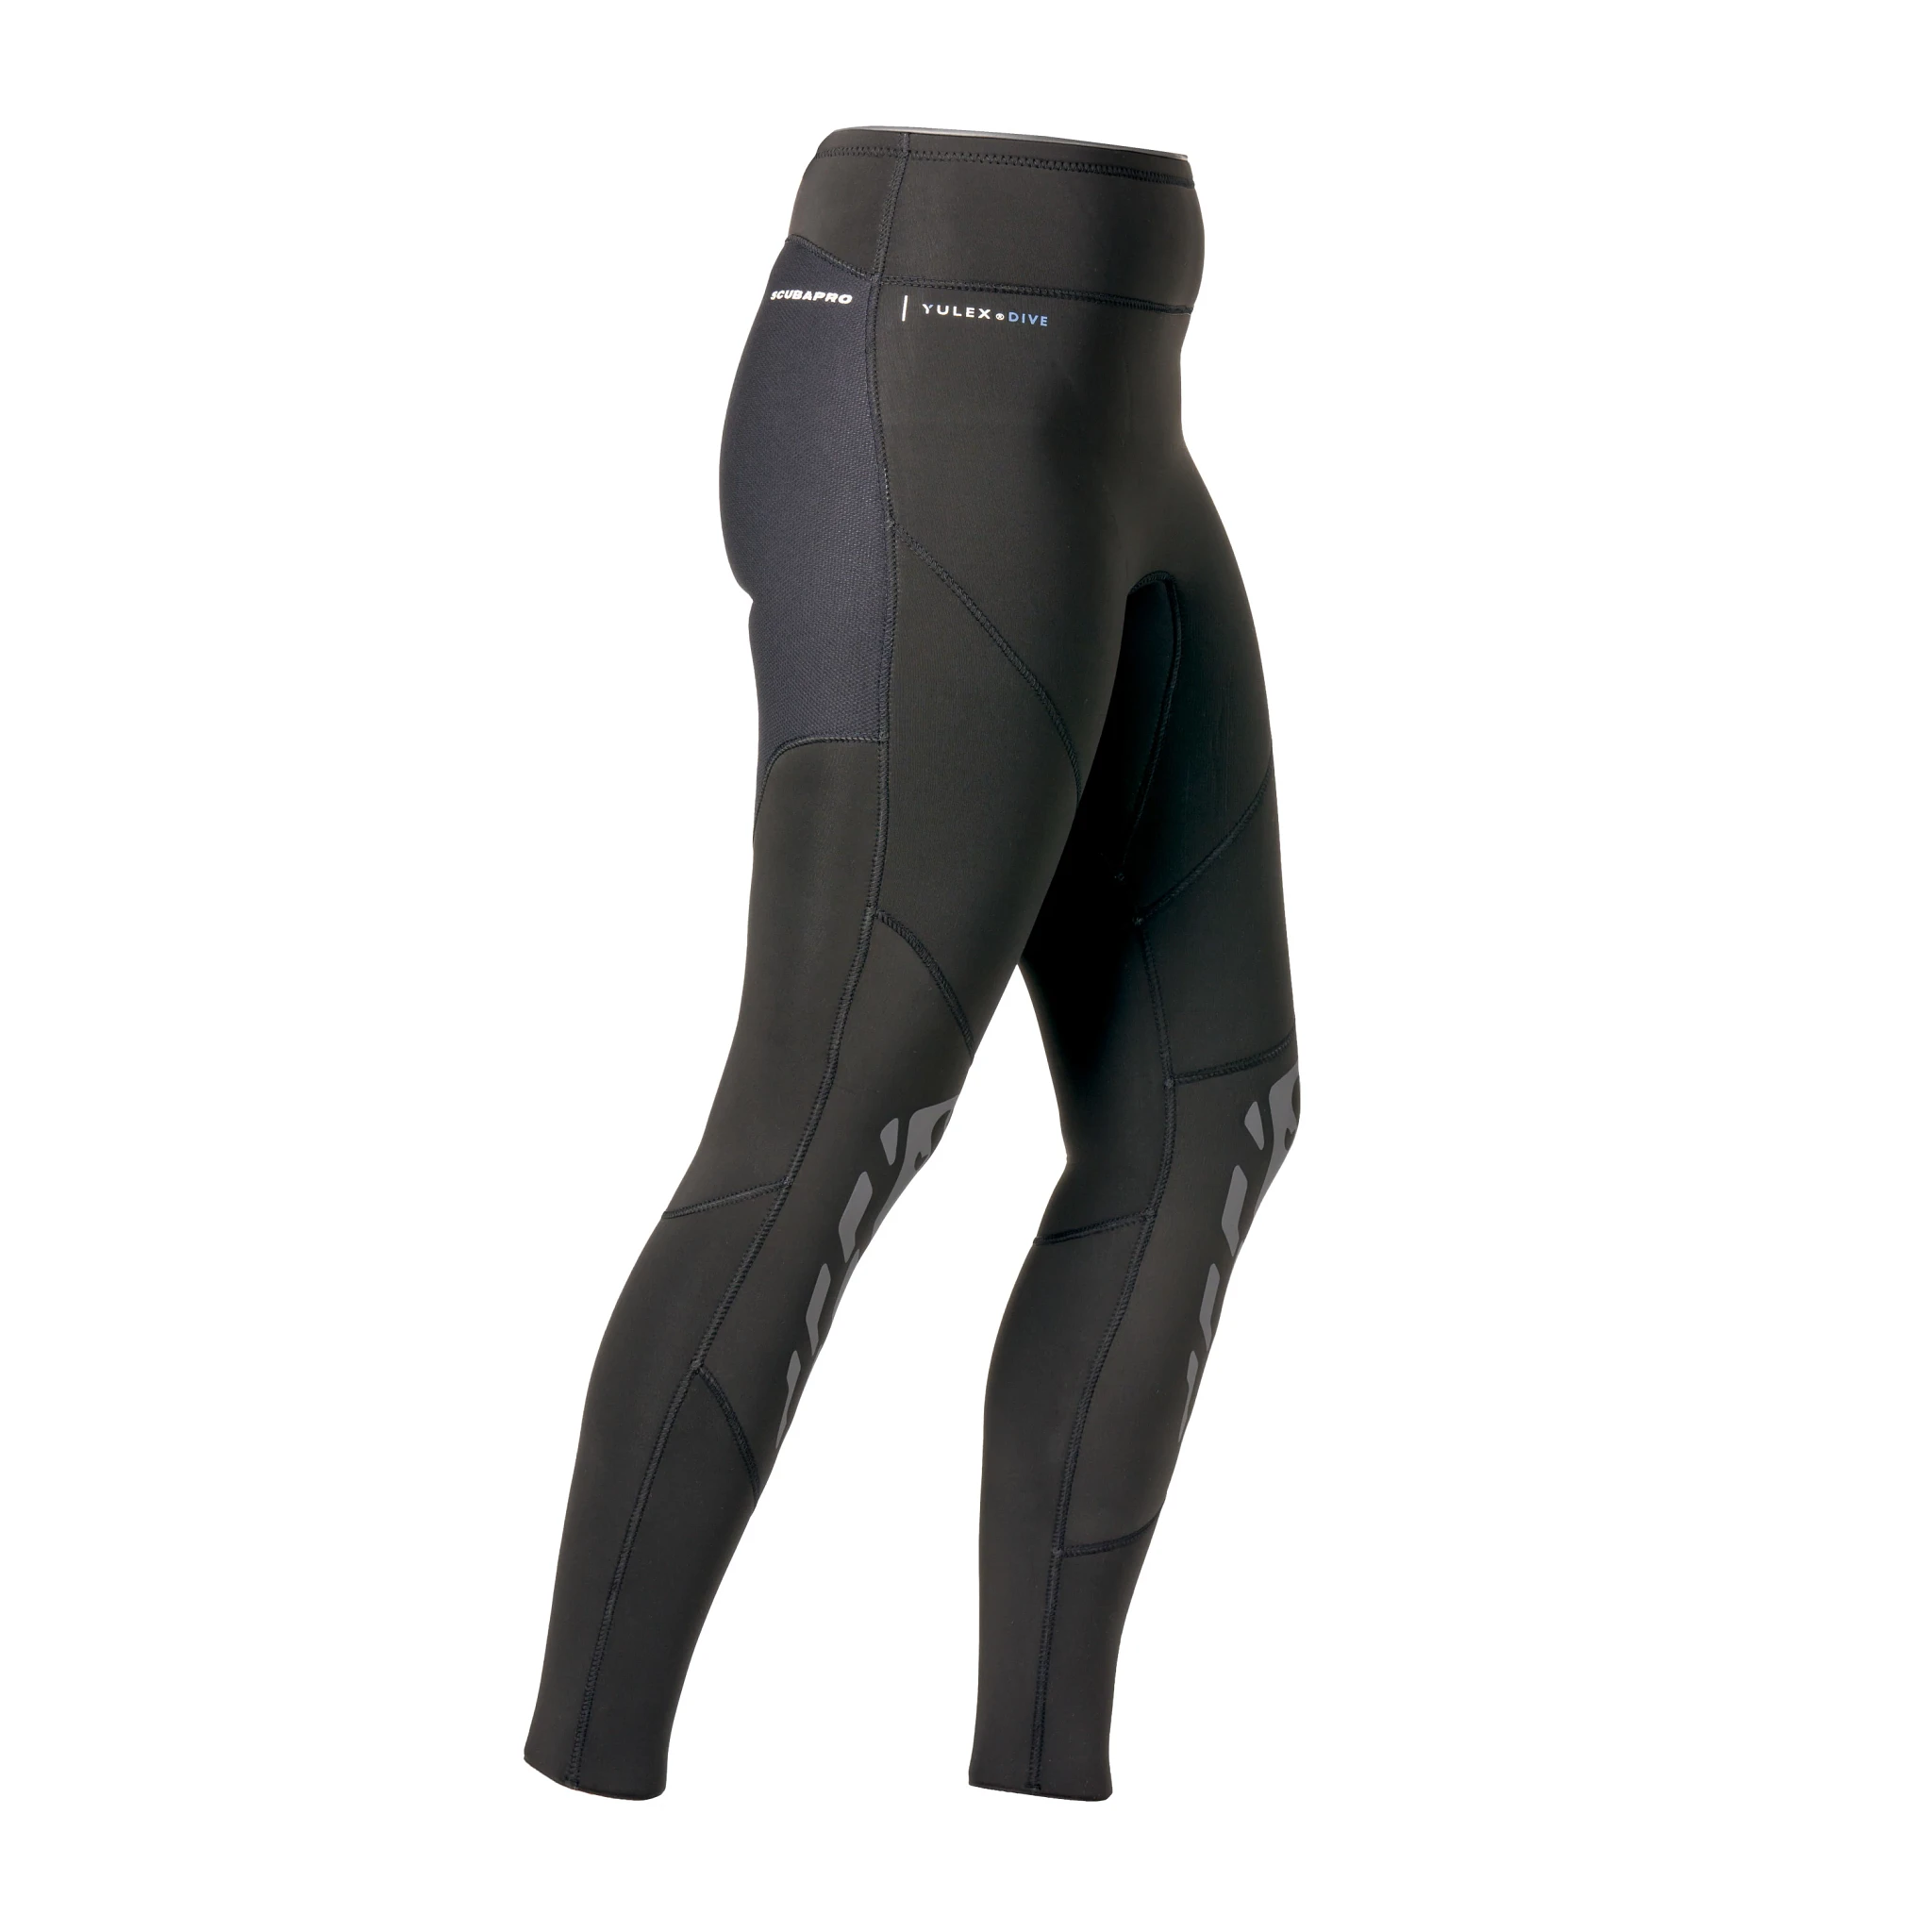 Everflex YULEX® Dive Pants, Women, 3mm